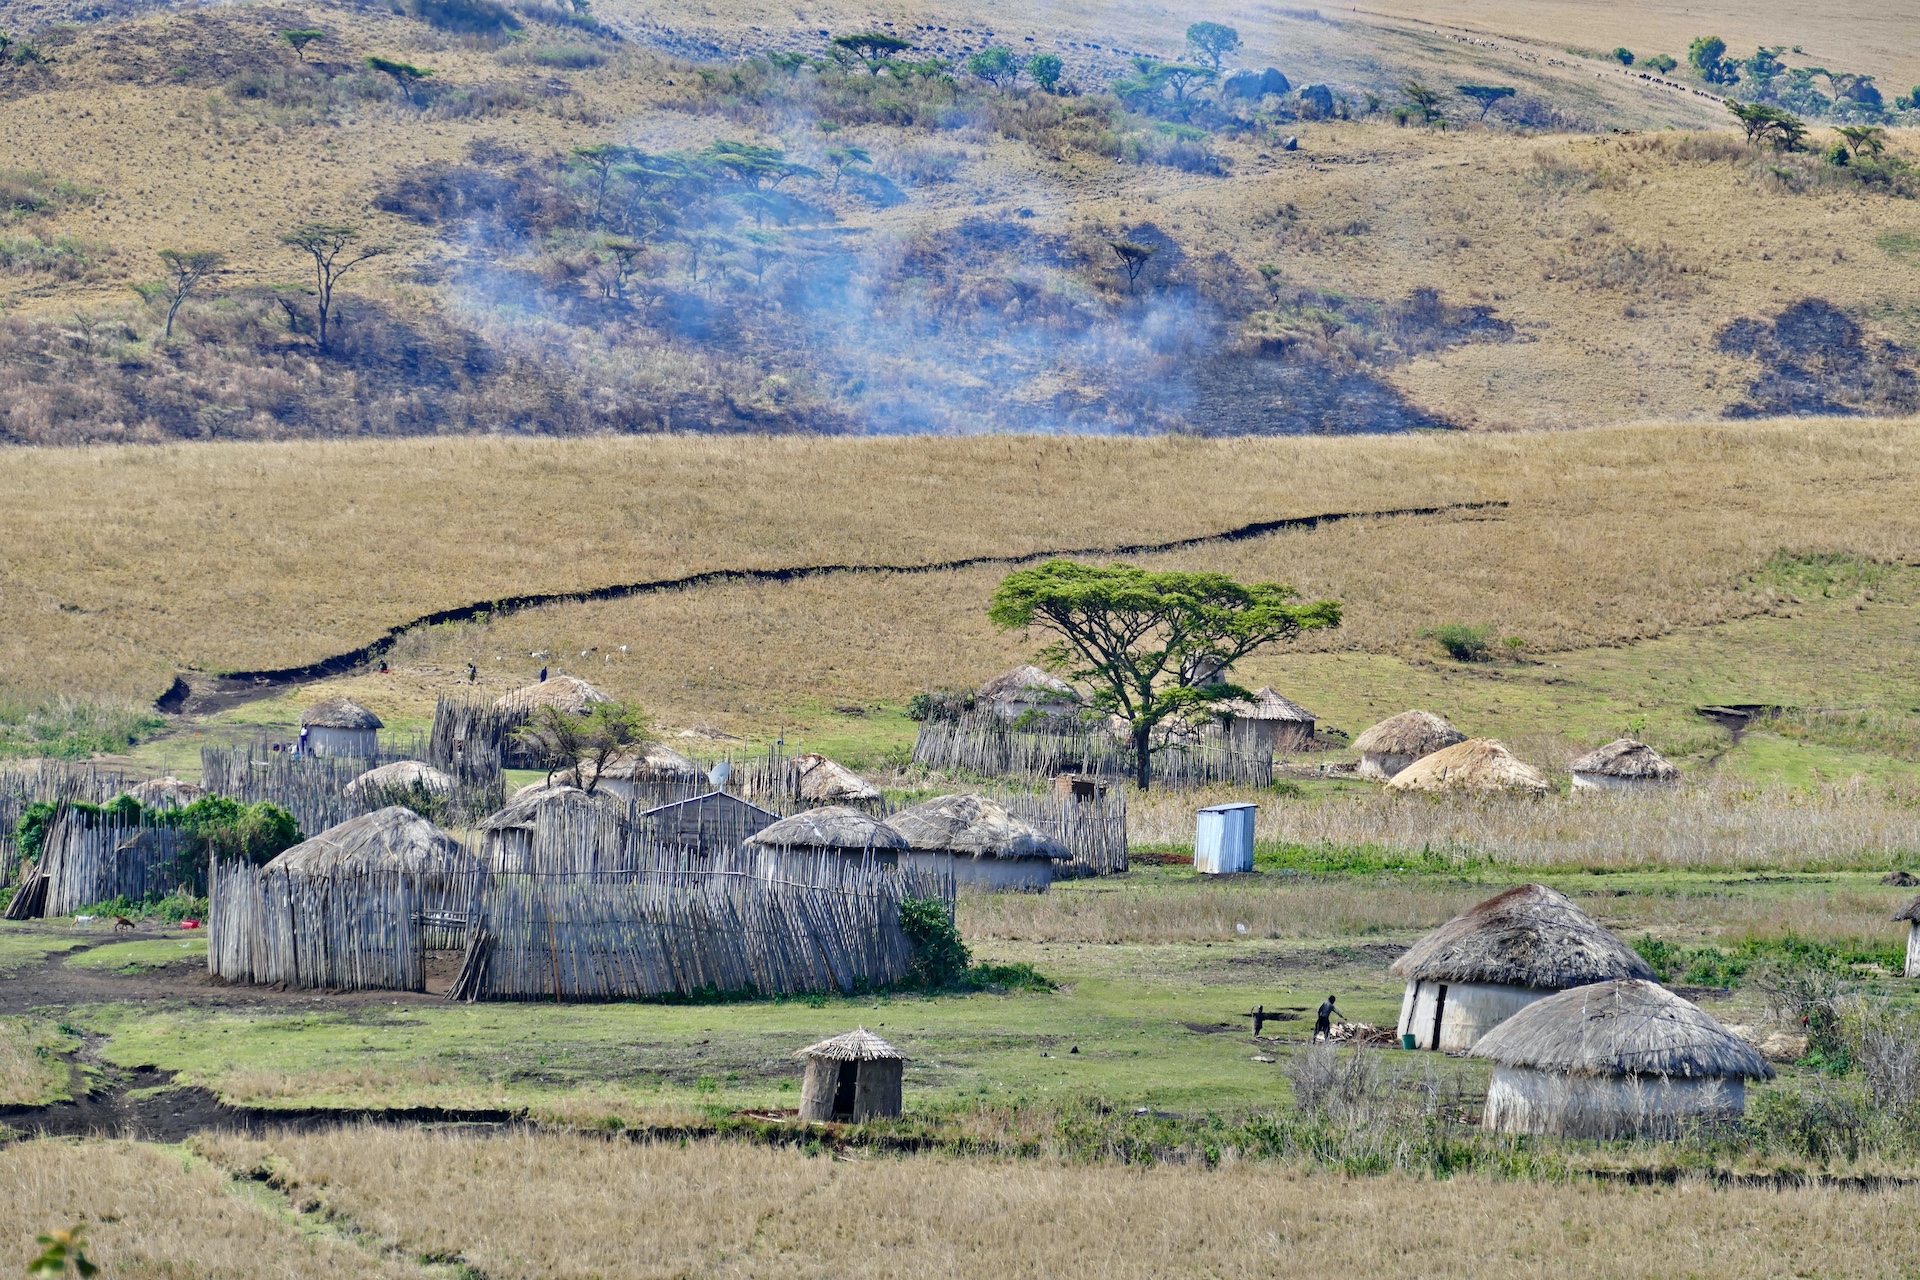 Maasai Village with World Adventure Tours